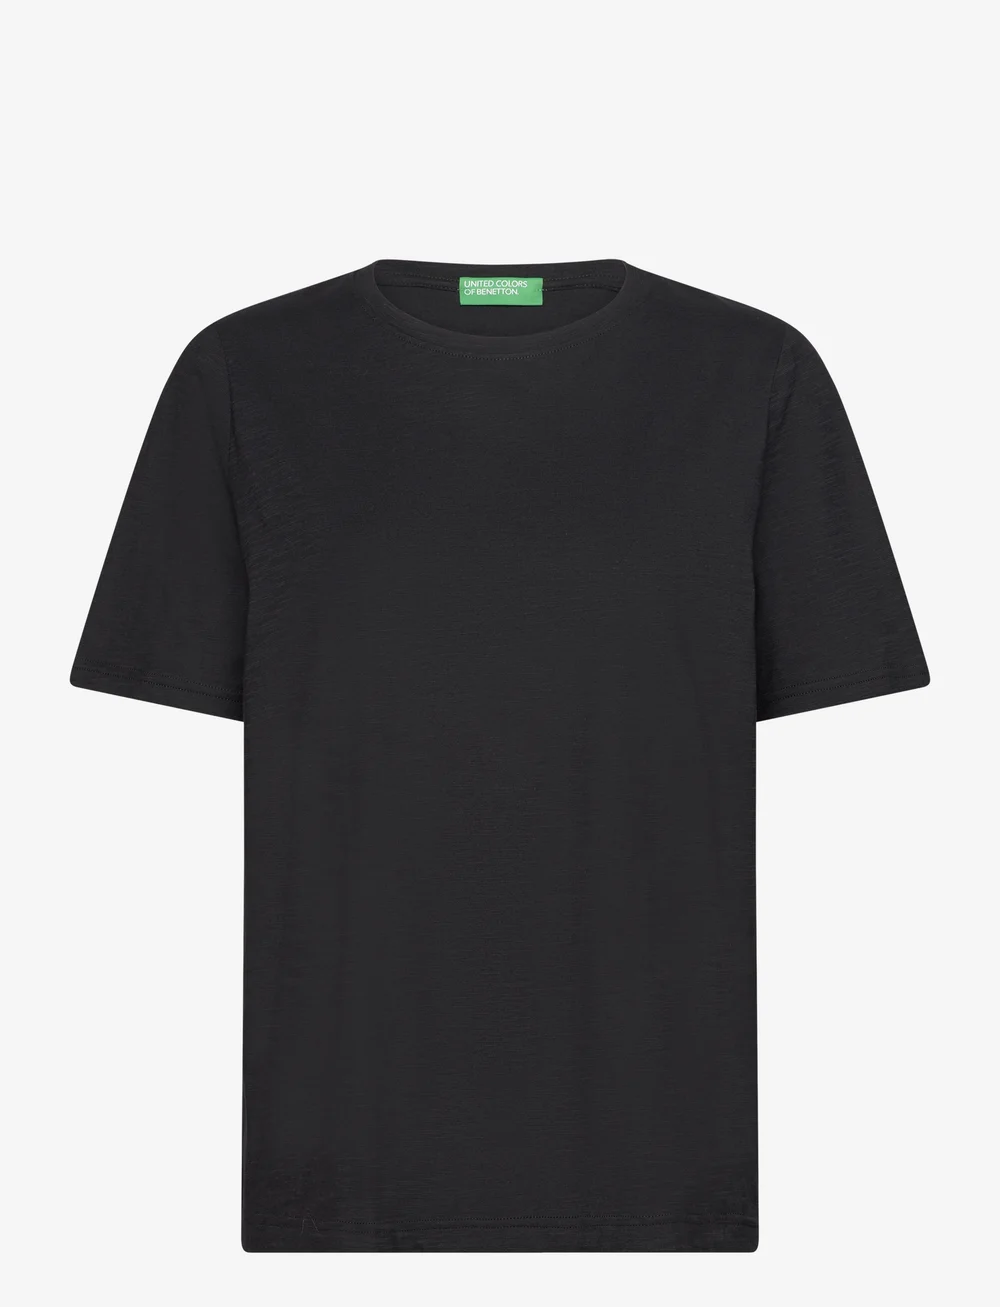 United Colors of Benetton Short Sleeves T-shirt - T-Shirts & Tops -  Boozt.com Switzerland | T-Shirts